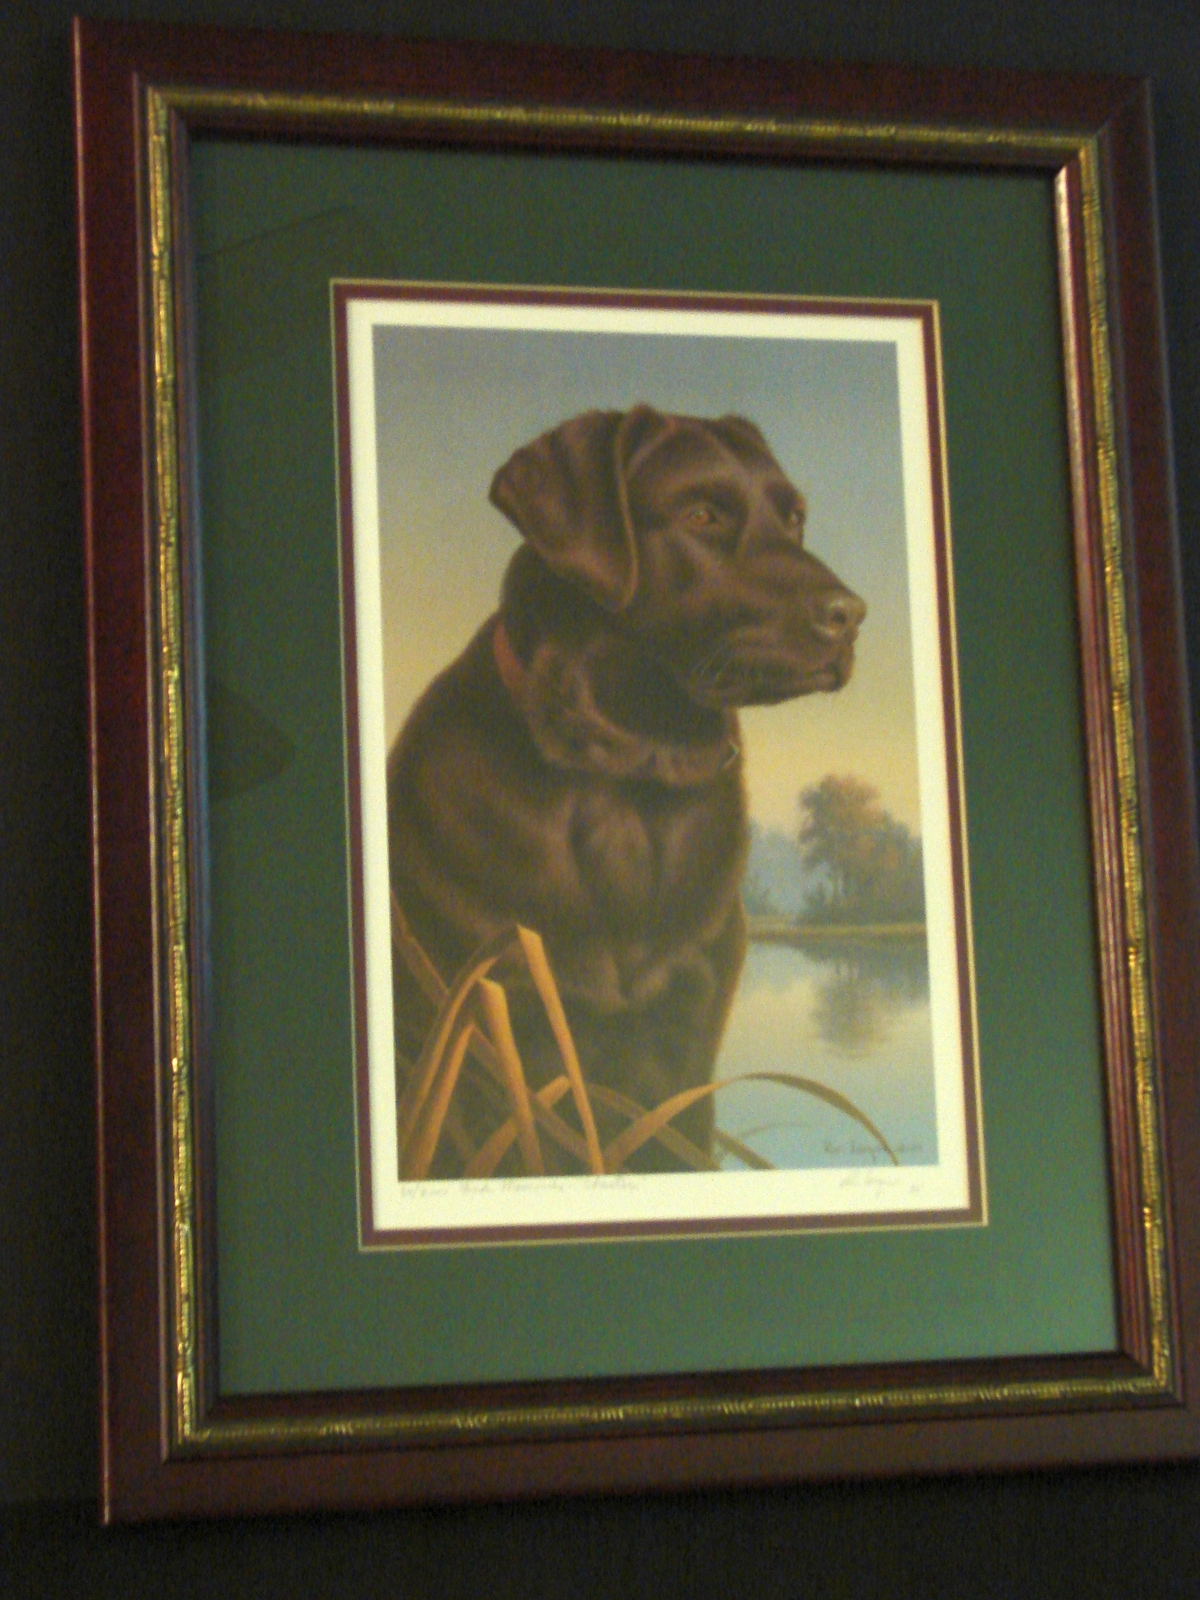 Chocolate Labrador Framed Ltd Ed Print Pencil Signed By Ronald J Louque 1994   - $23.99